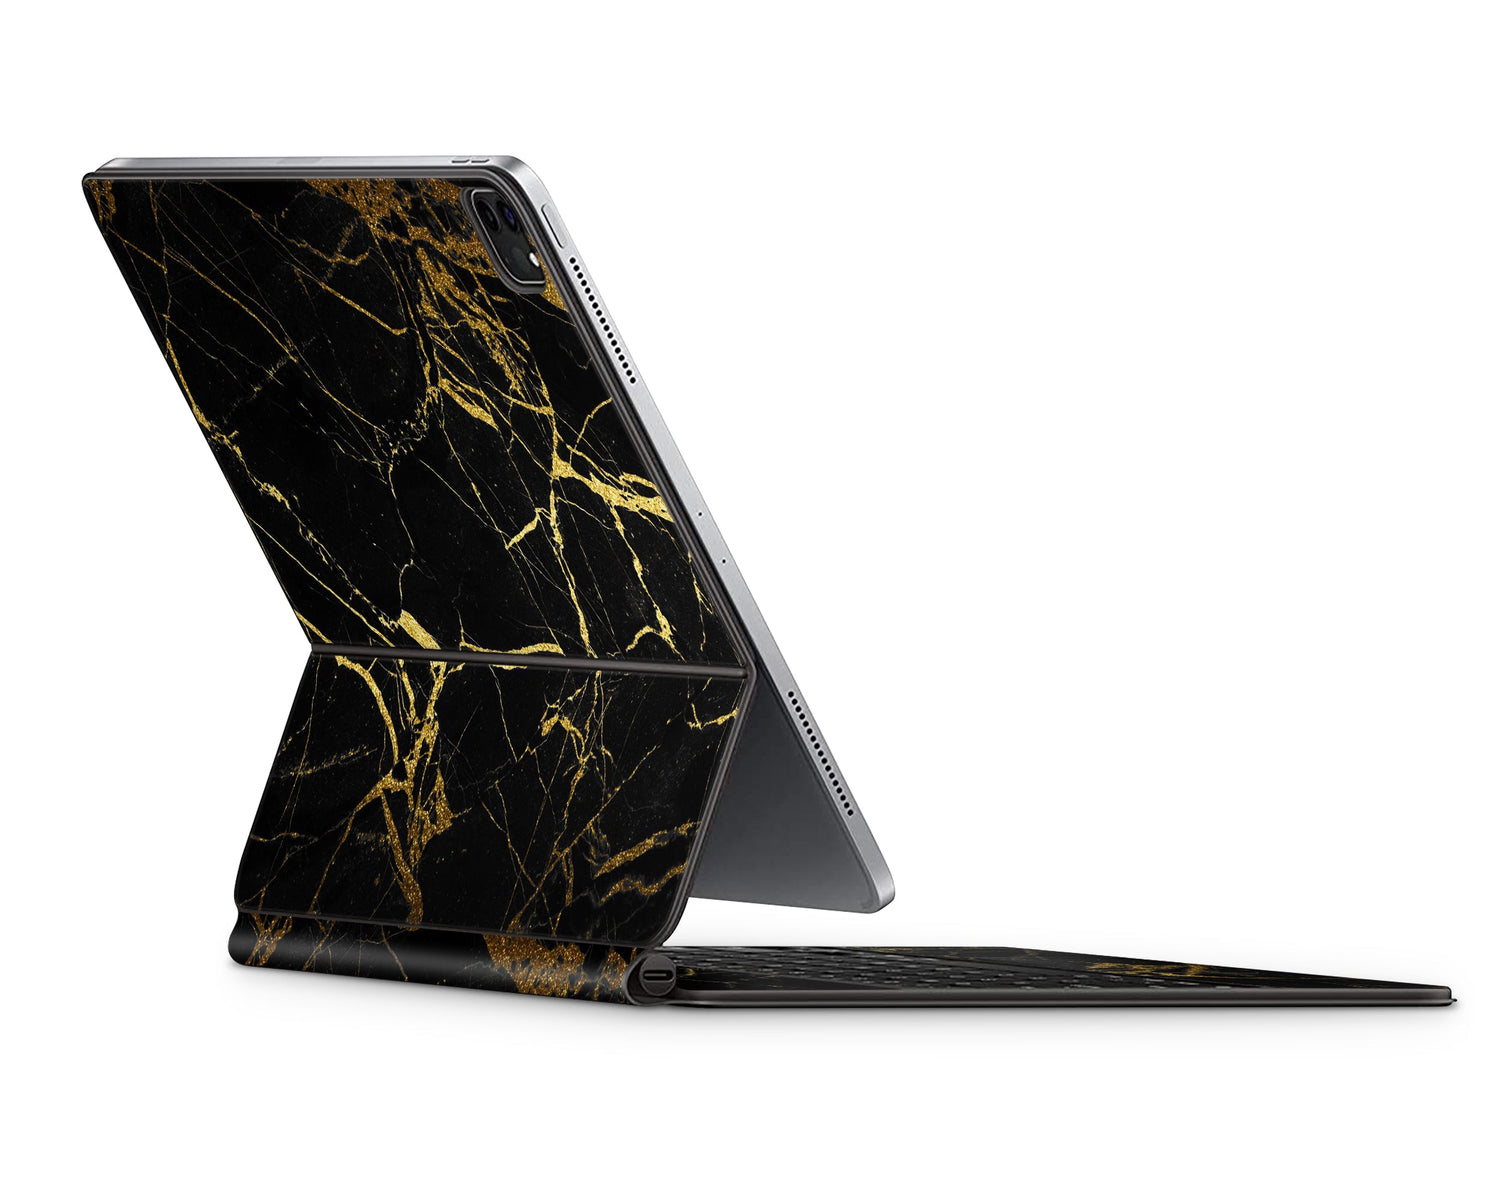 Lux Skins Magic Keyboard Black Gold Marble iPad Pro 12.9" Skins - Pattern Marble Skin